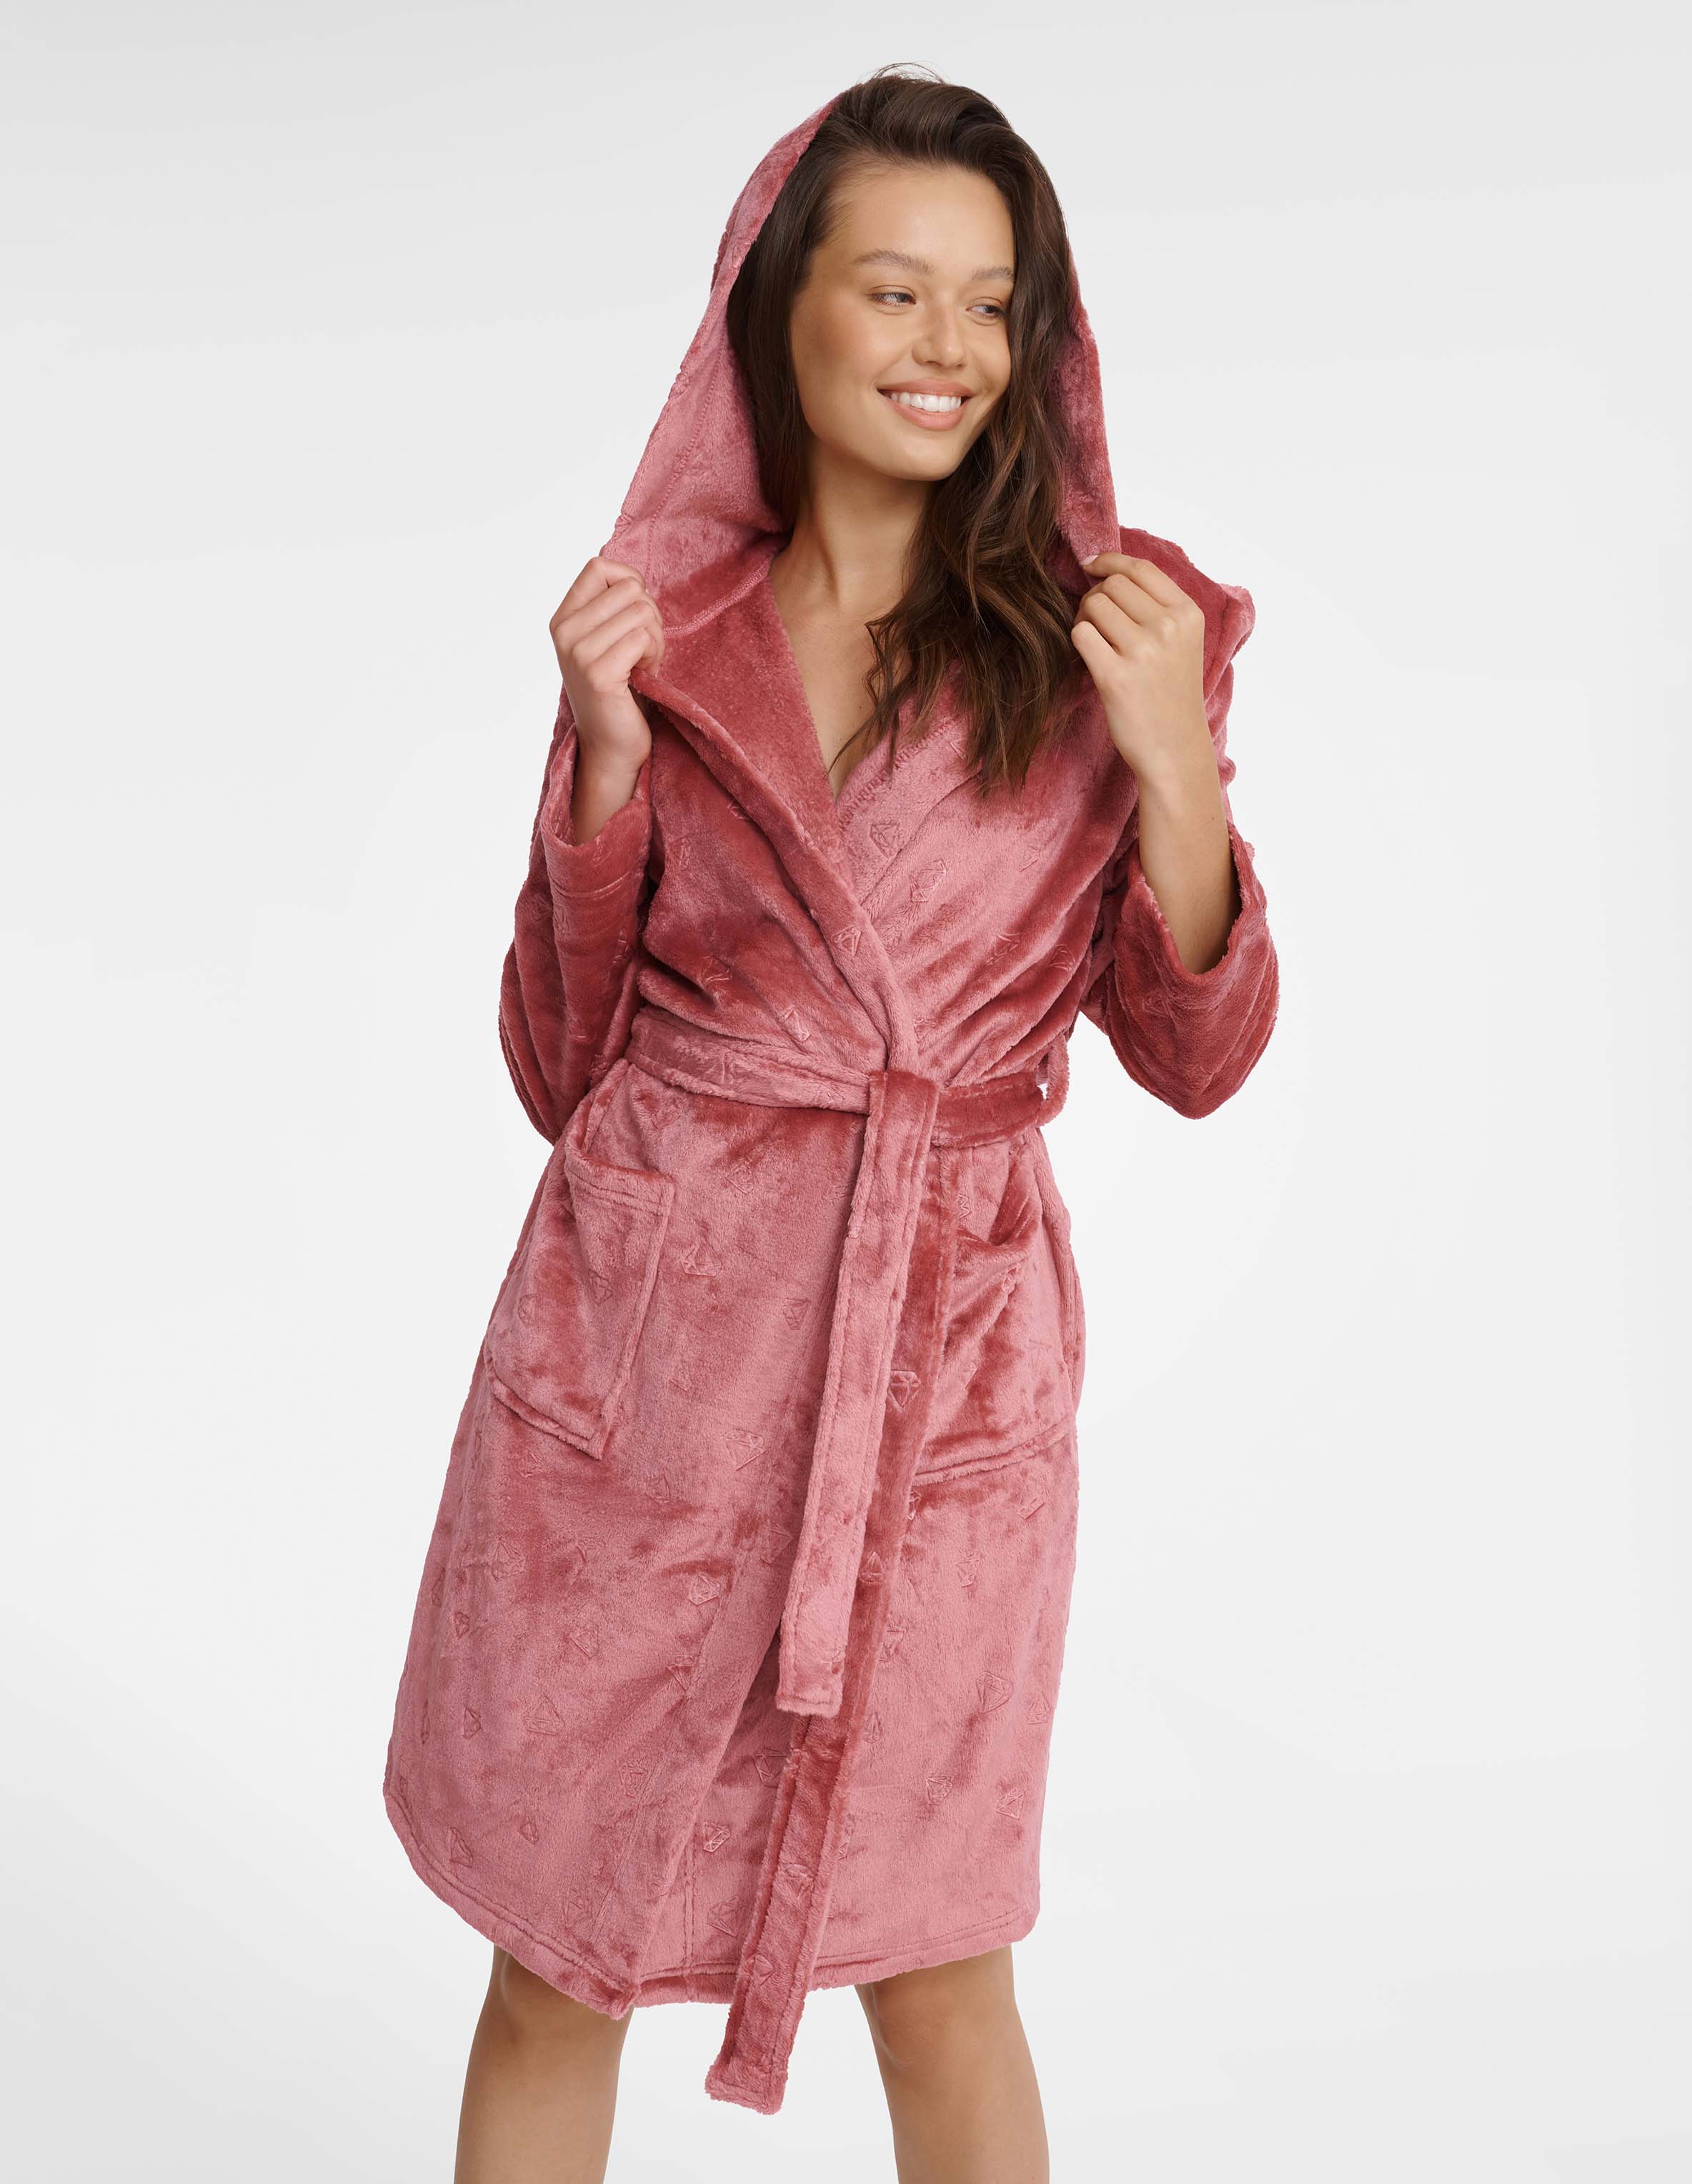 Shiny bathrobe 41066-39X pink-pink